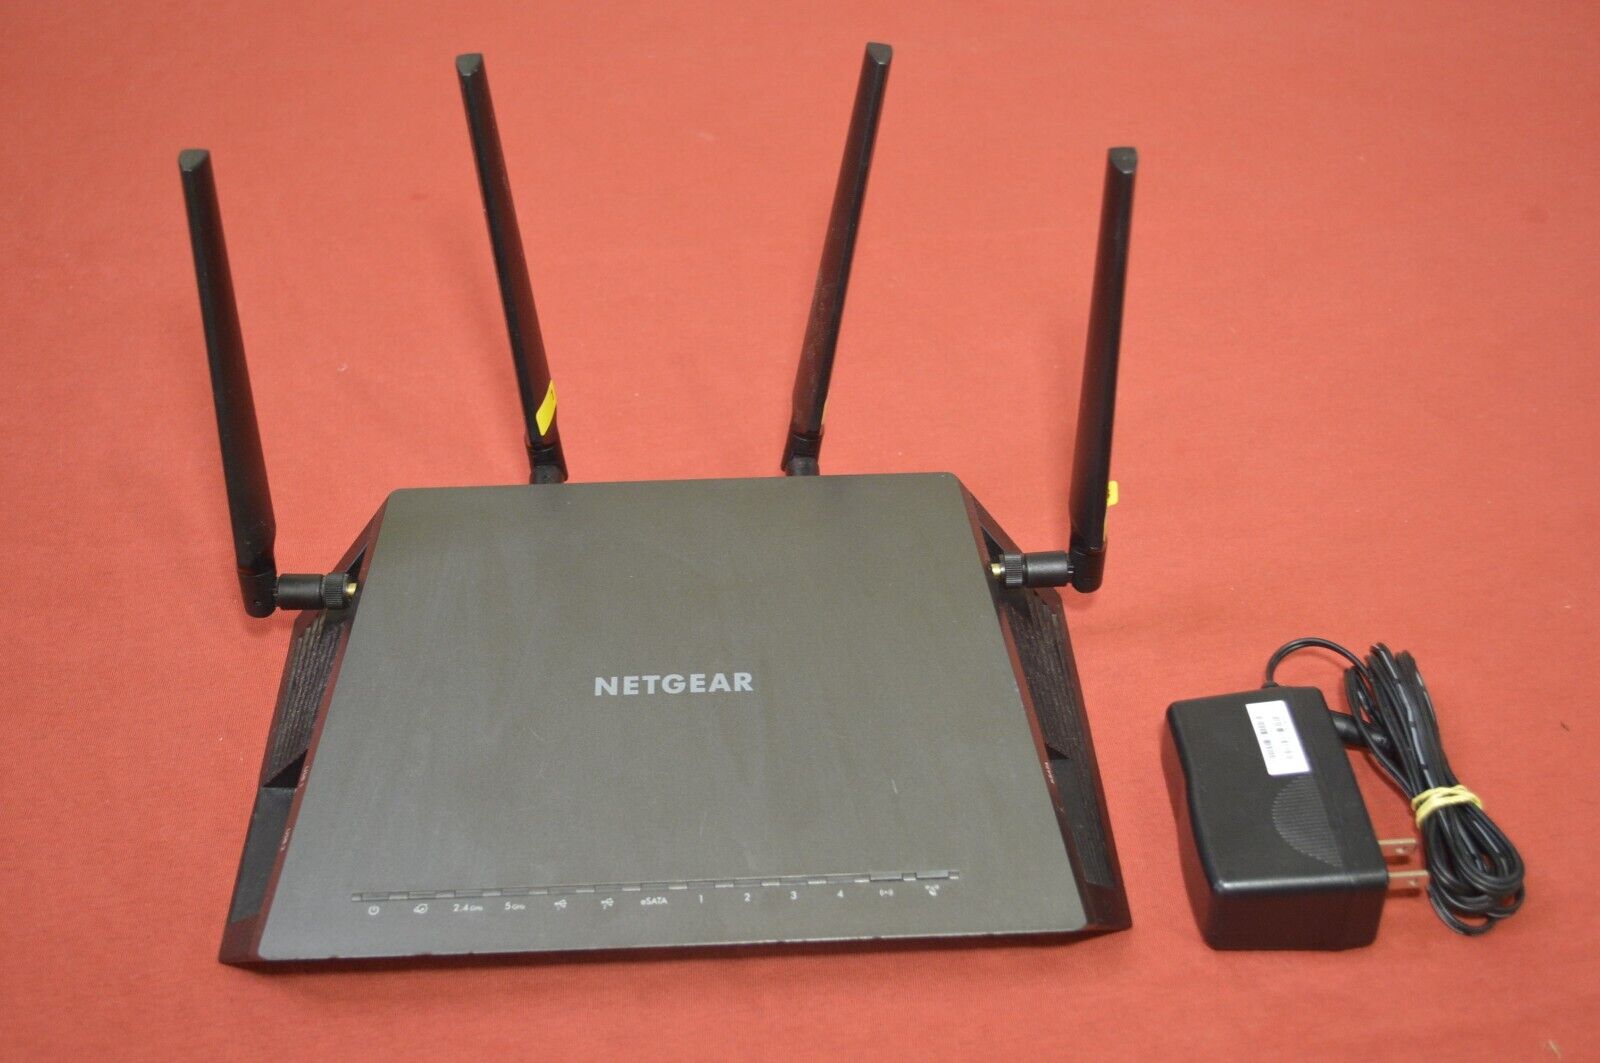 NETGEAR Nighthawk X4 AC2600 Smart WiFi Router